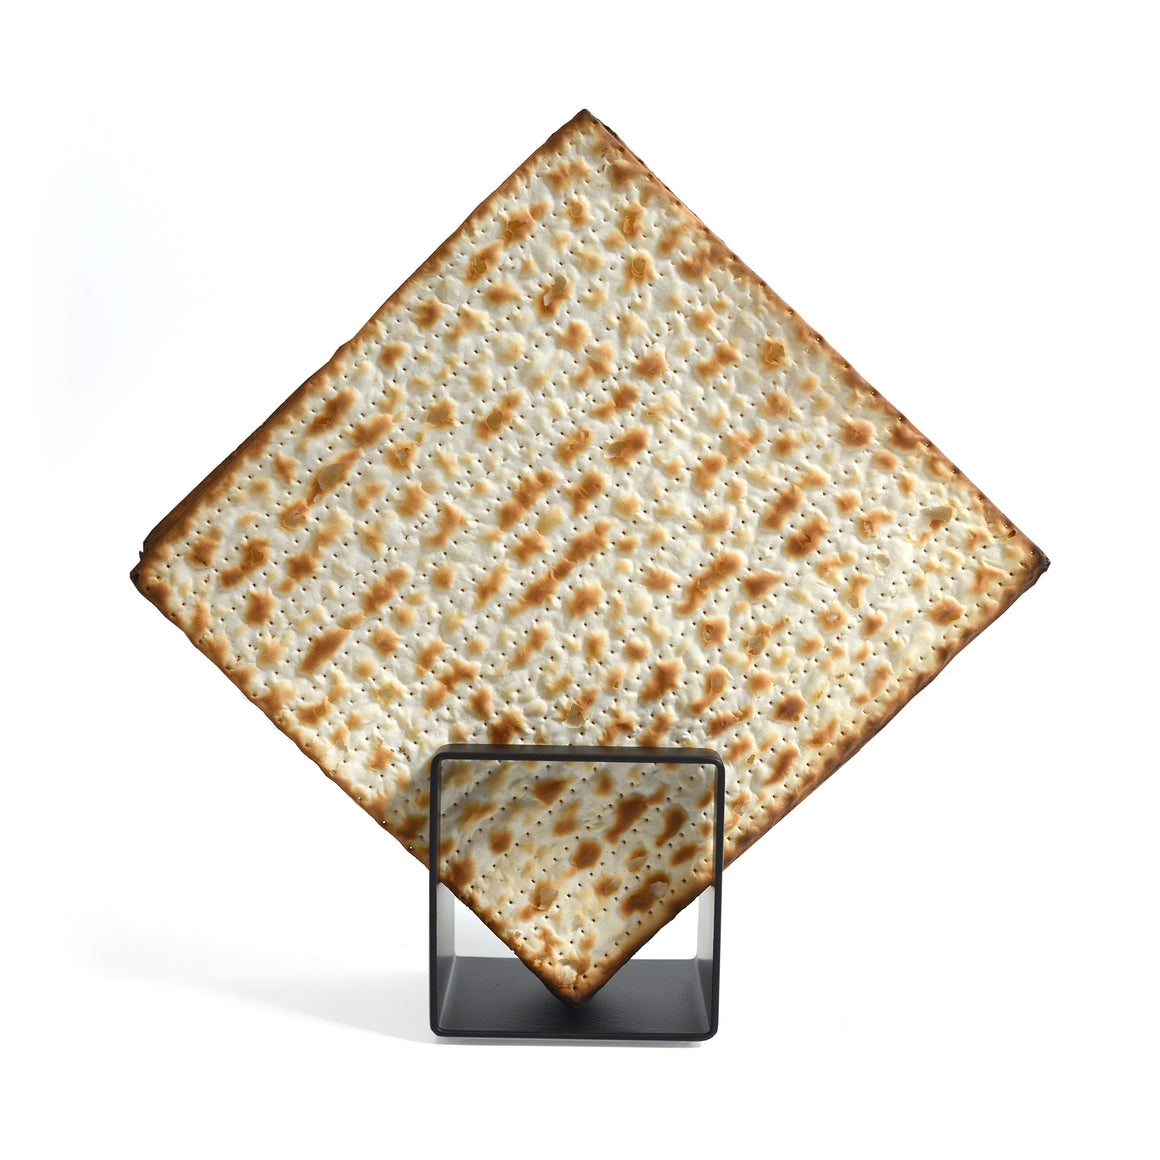 Minimalistic Passover Matza stand